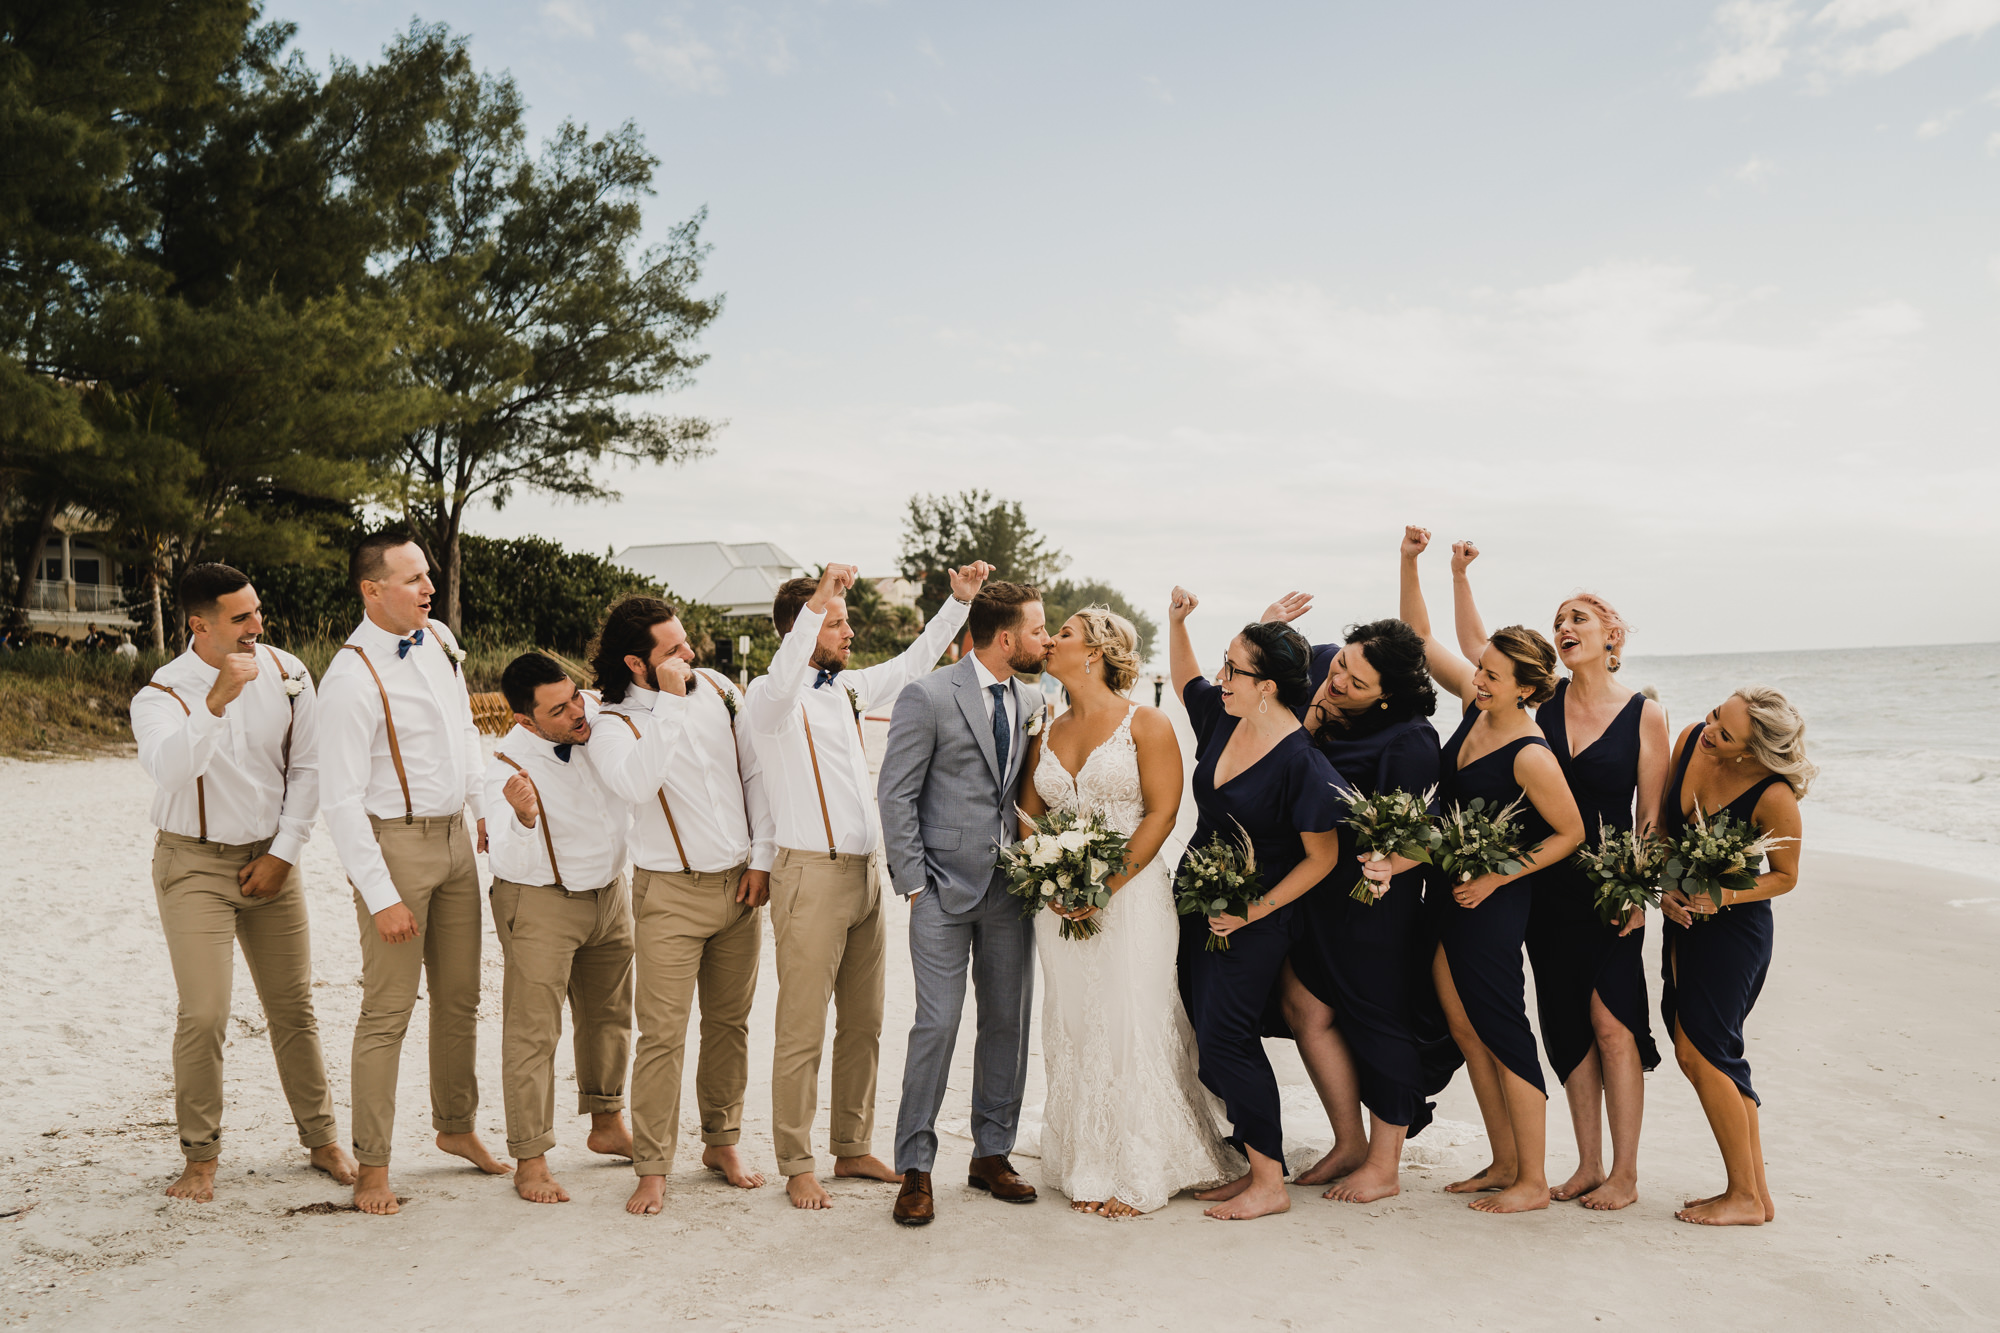 Rustic Wedding Party Attire Inspiration | Groomsmen Suspenders and Khaki Pants | Bridesmaids Navy Dress | Gray Groom Suit with Navy Tie | Barefoot Beach Wedding